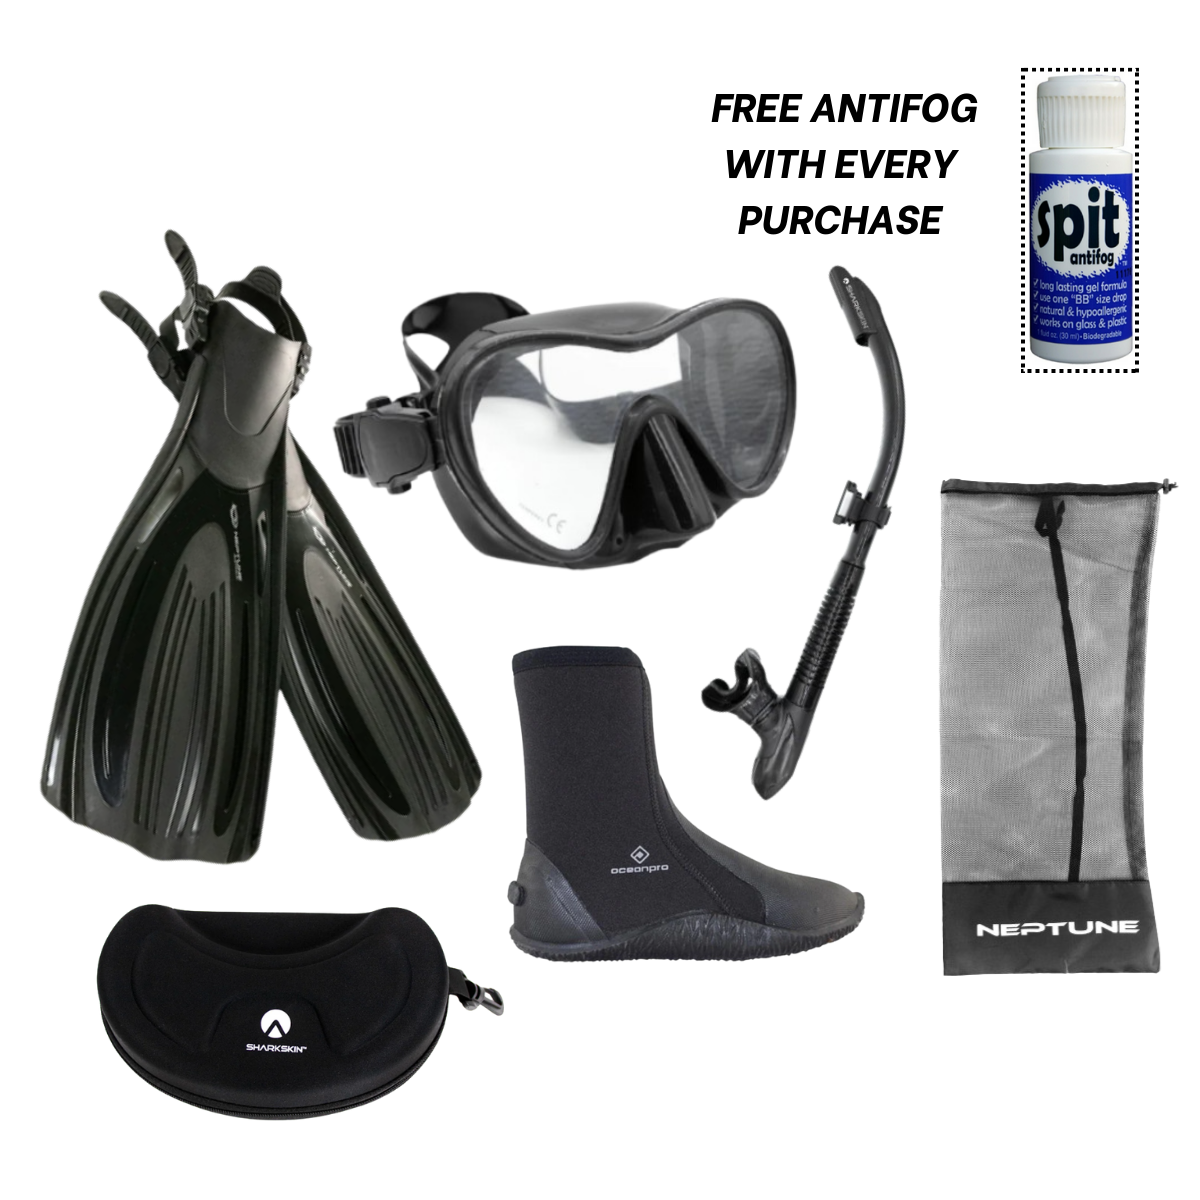 Blitz Open Heel Fin, Softseal Mask, Aruna Snorkel, Boots & Bag + Free Antifog